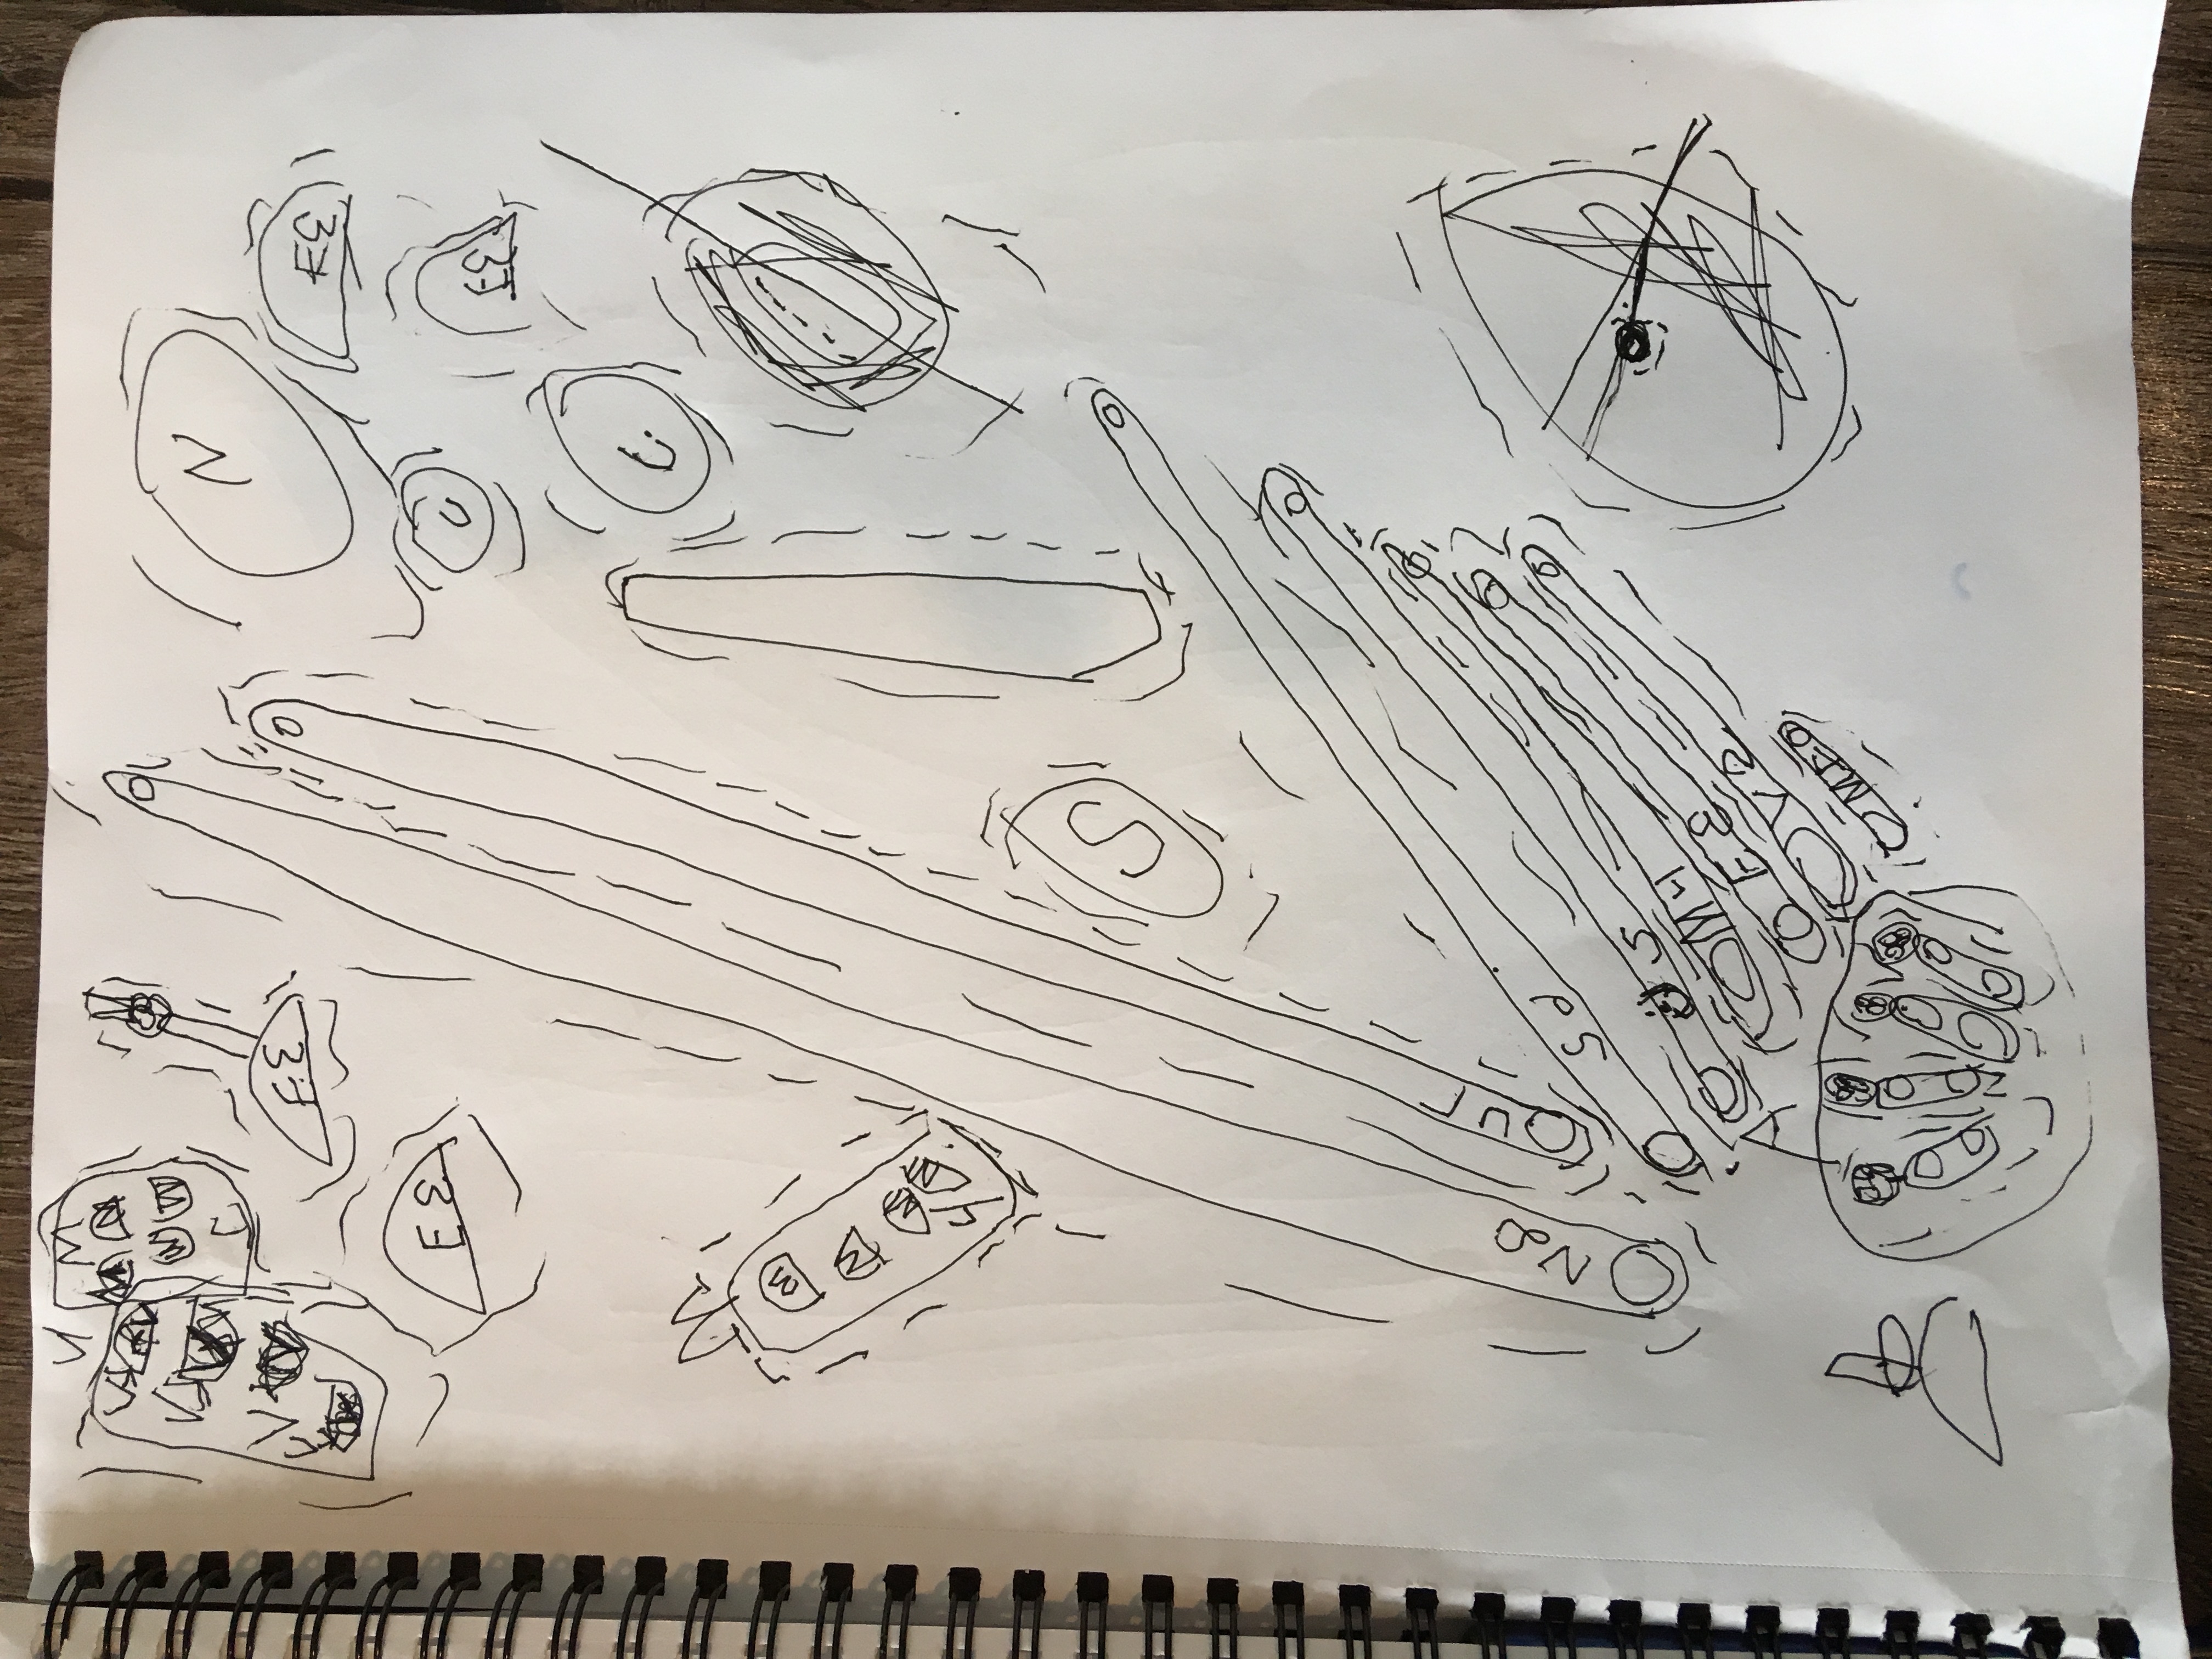 A solar system kit